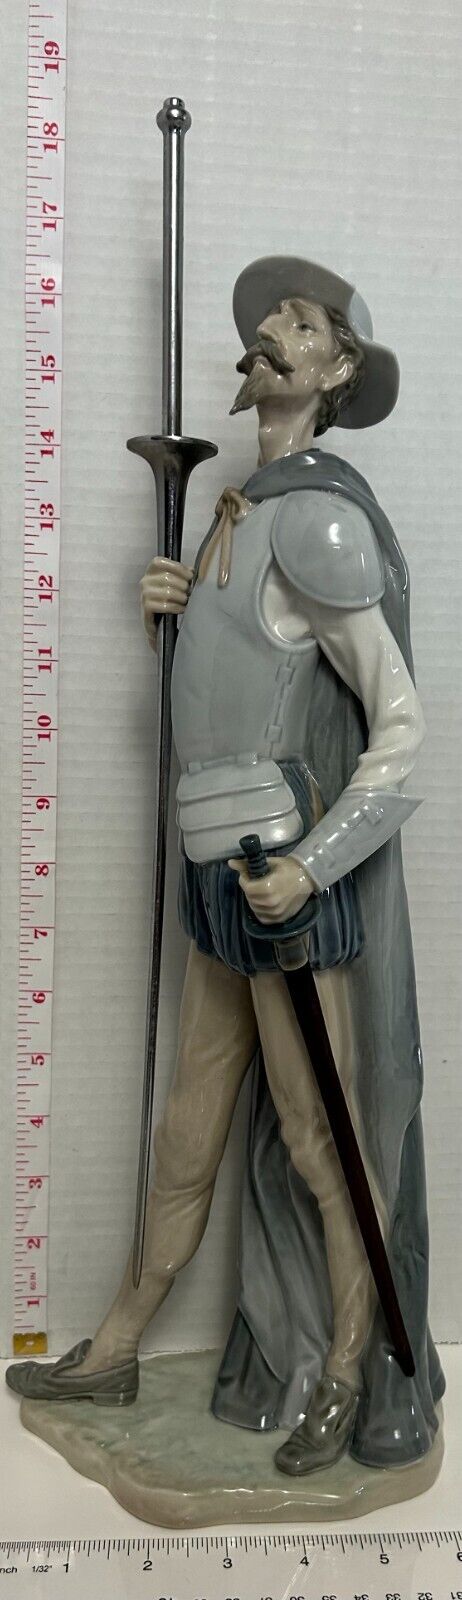 RARE Lladro Figurine Don Quixote On Guard w Sword and Wooden Lance #1385 